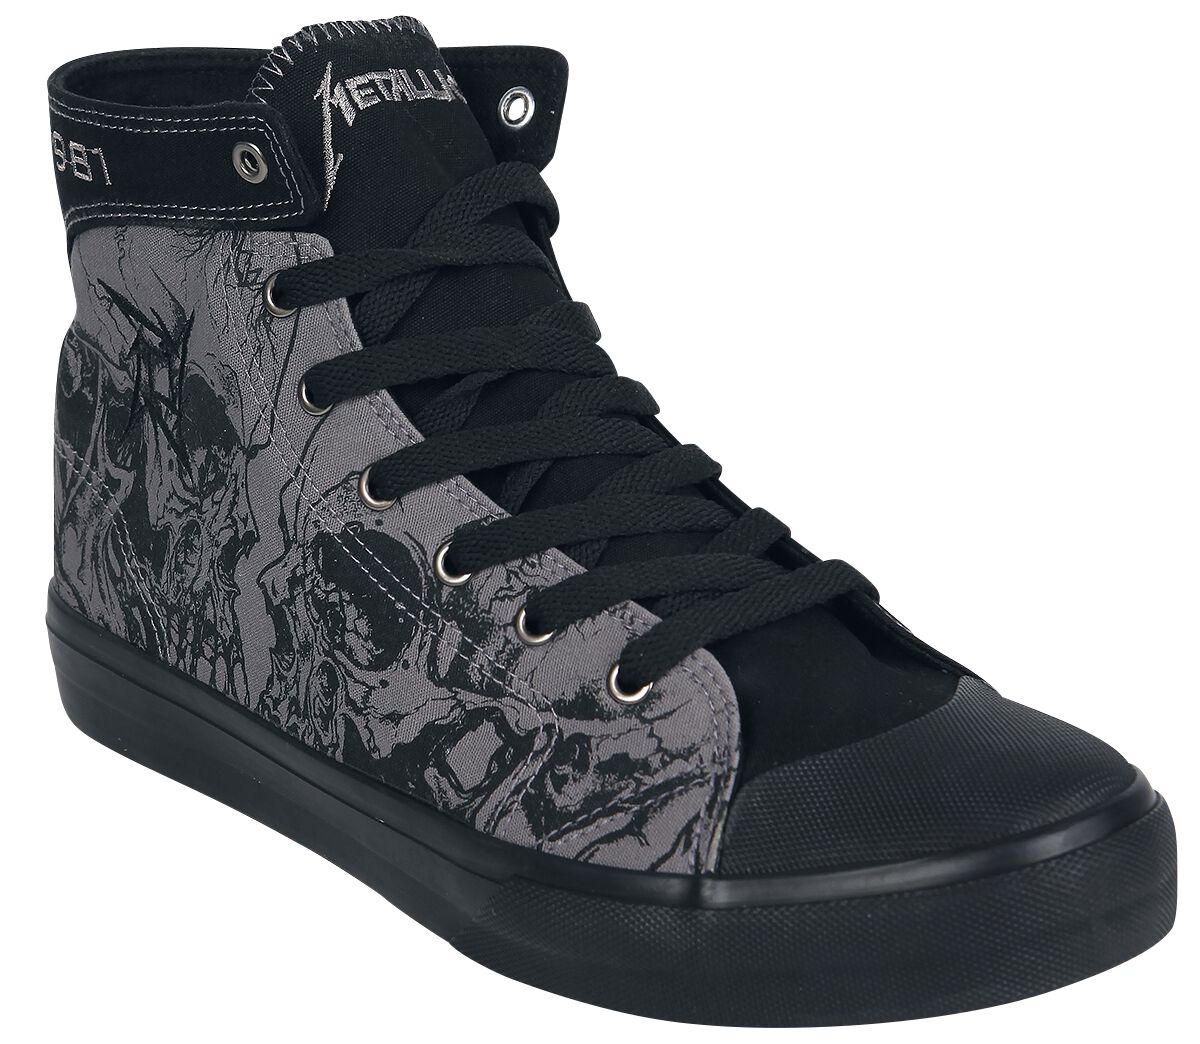 Metallica Sneaker high - EMP Signature Collection - EU37 bis EU47 - Größe EU45 - grau/schwarz  - EMP exklusives Merchandise!